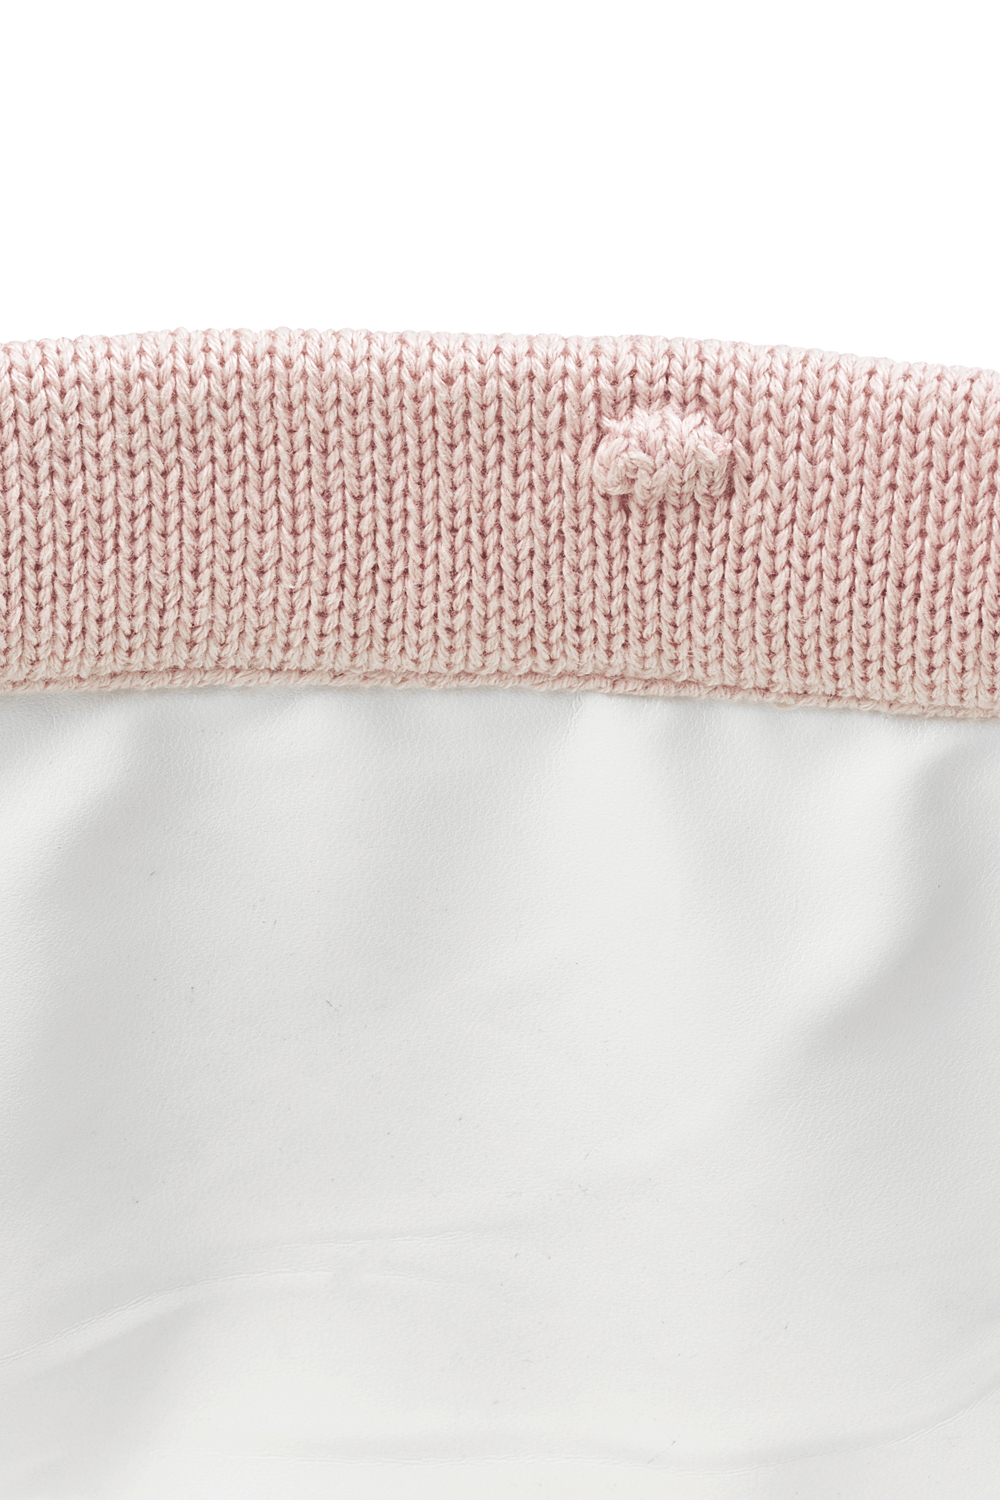 Wickeltischkörbchen Mini Knots - soft pink - Small